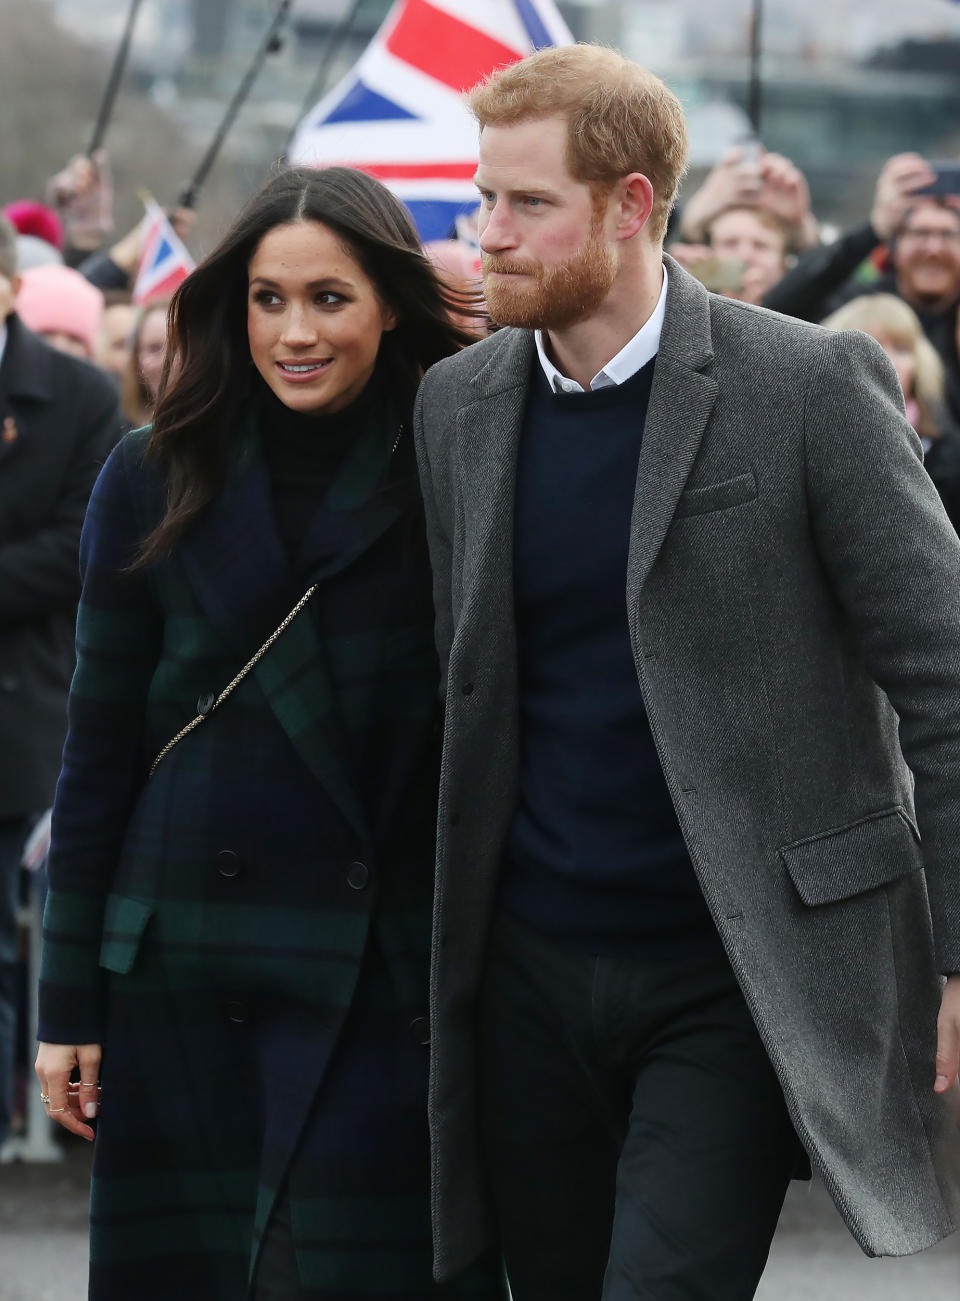 Prince Harry And Meghan Markle Visit Edinburgh (Andrew Milligan / Getty Images)